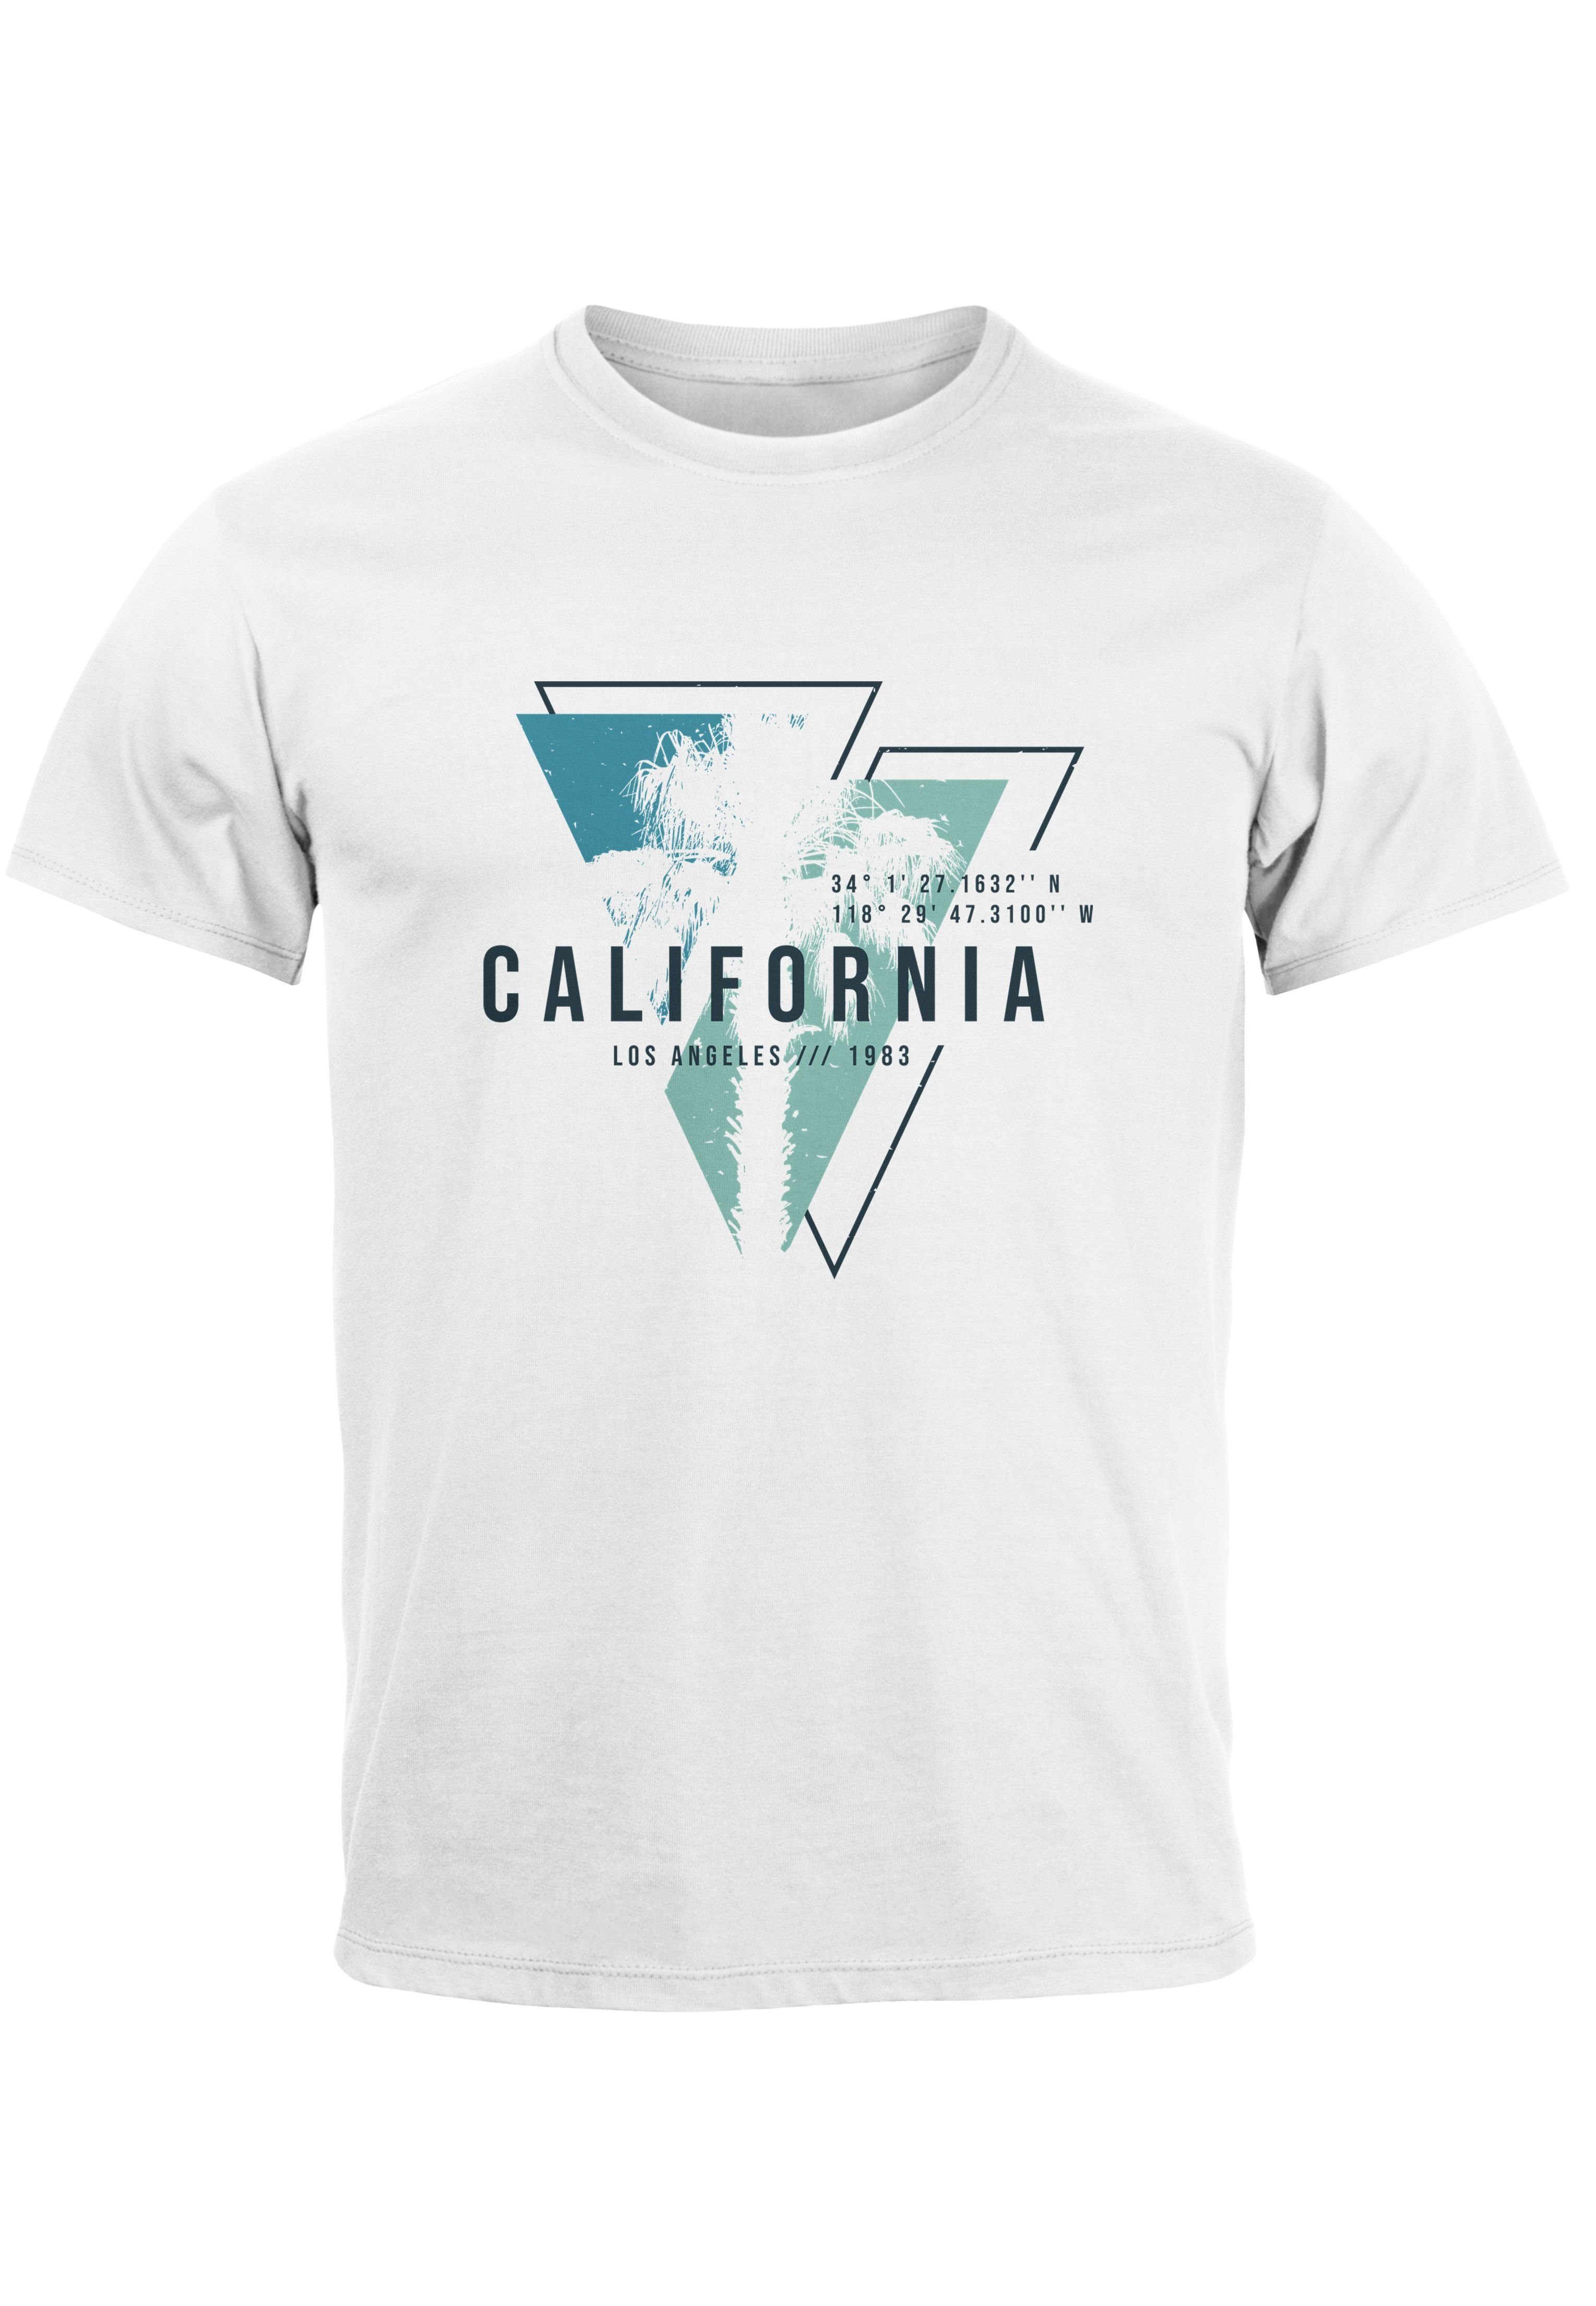 Neverless Print-Shirt Herren T-Shirt weiß Angeles Motiv California Surfing Fashion mit Print Sommer USA Los